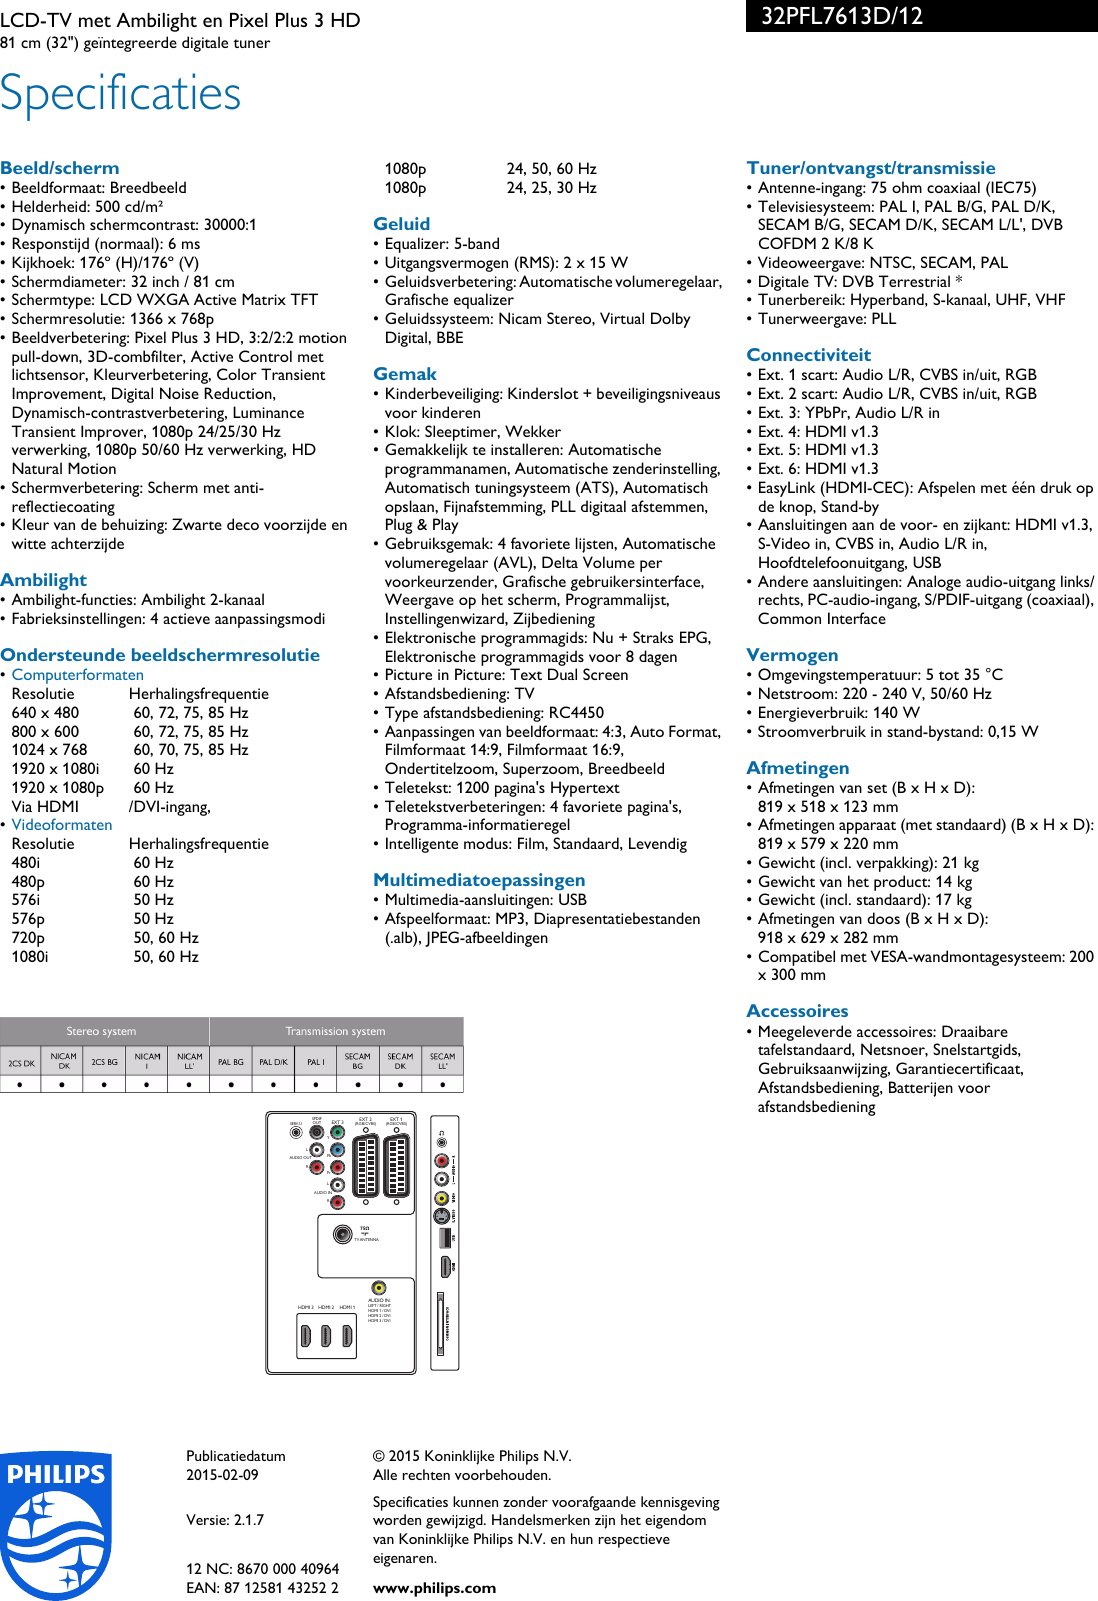 Page 3 of 3 - Philips 32PFL7613D/12 LCD-TV Met Ambilight En Pixel Plus 3 HD User Manual Brochure 32pfl7613d 12 Pss Nldnl